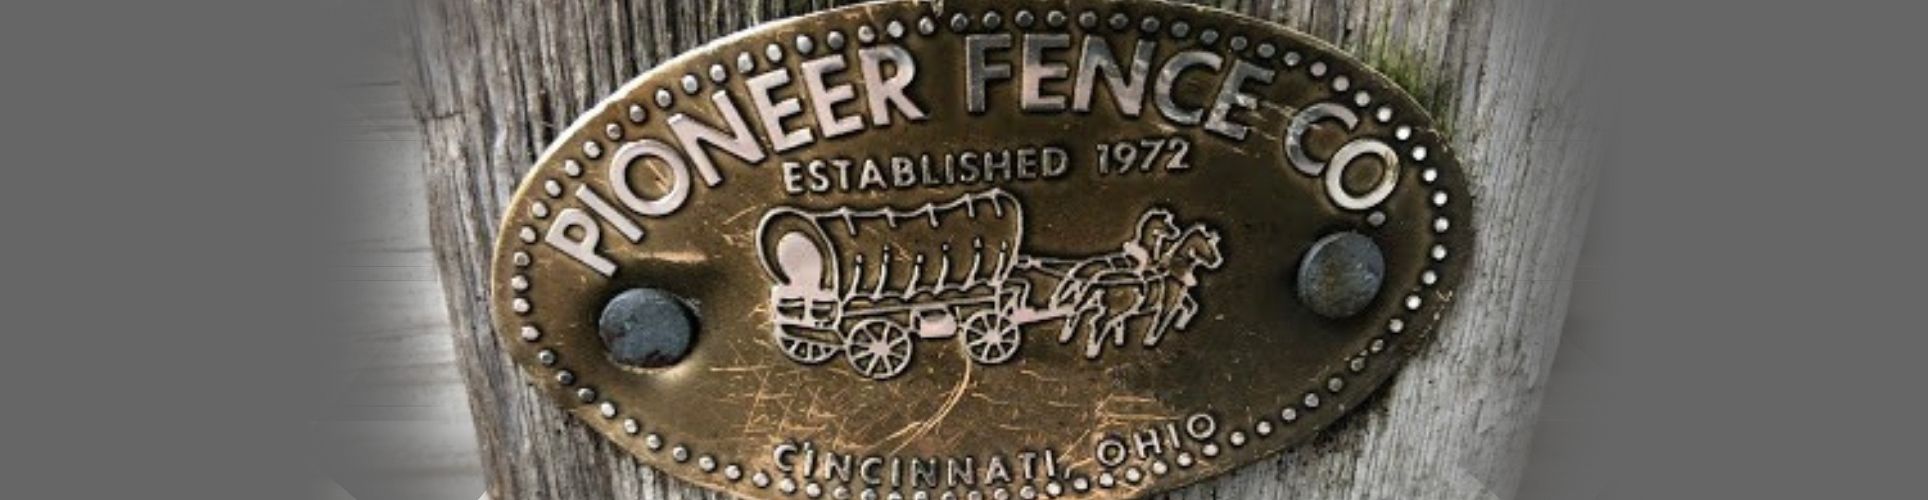 Pioneer Fence Company in Cincinnati, OH